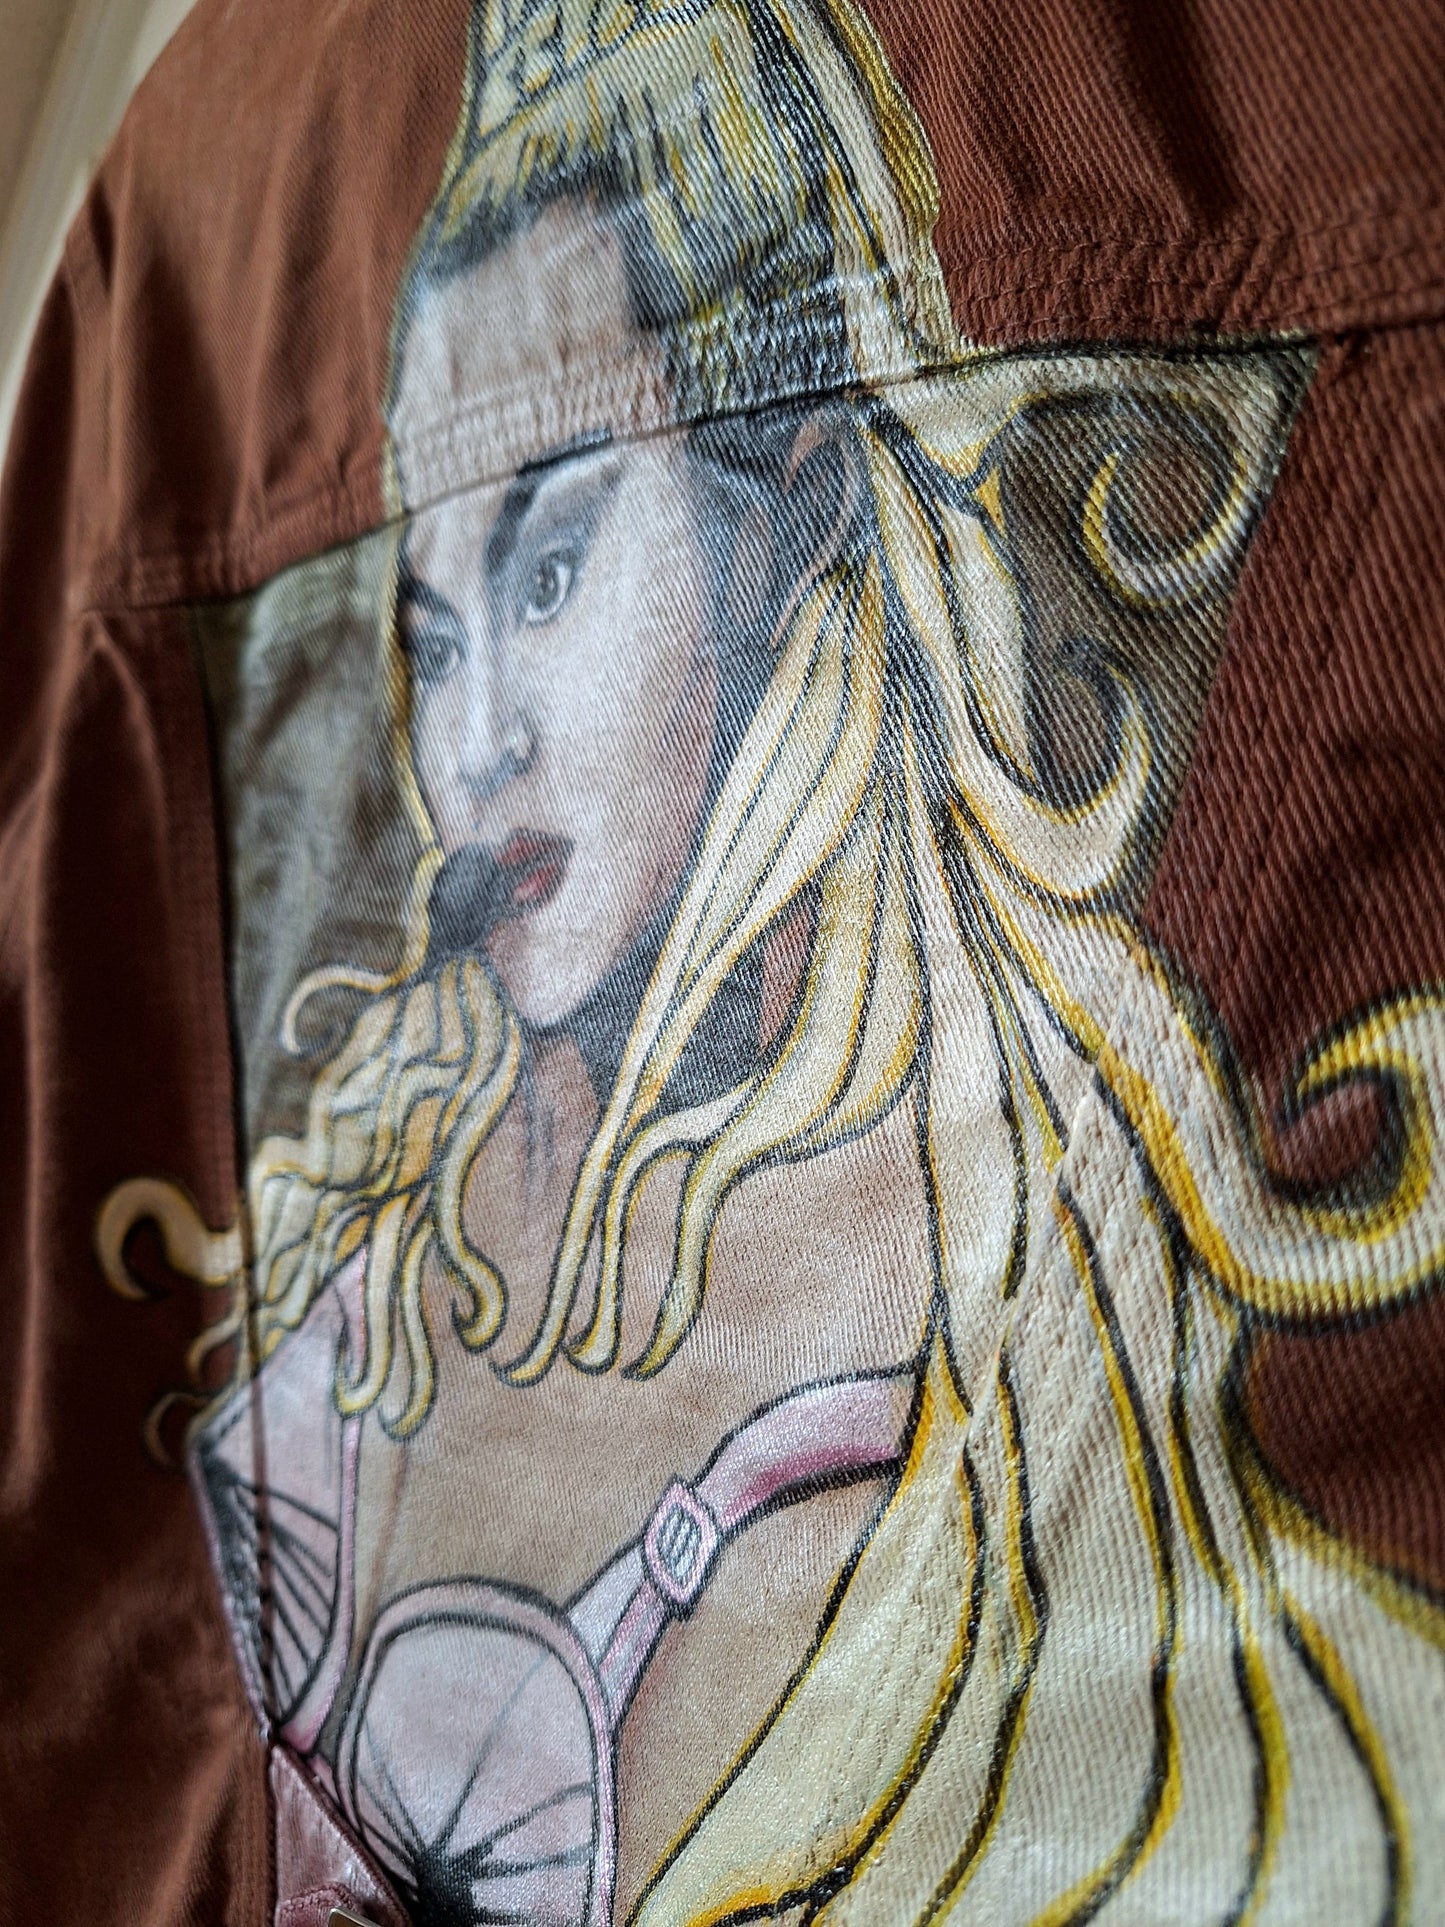 Chaqueta Vintage Jean Paul Gaultier pintada Madonna